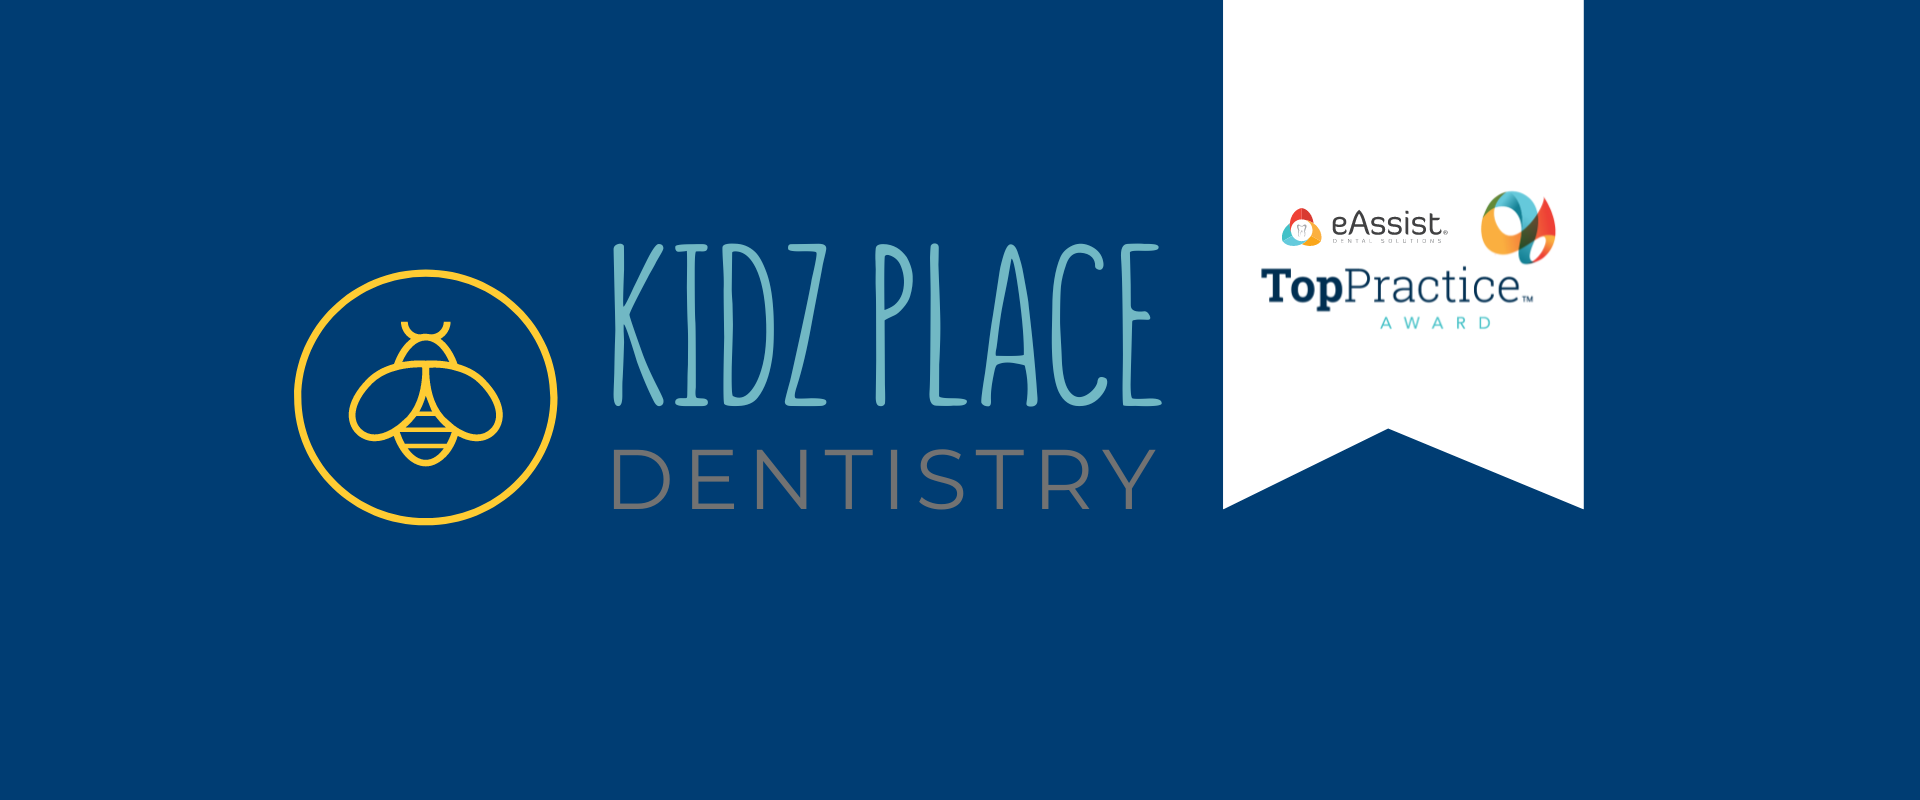 Kidz Place Dentistry Wins eAssist Top Practice Award